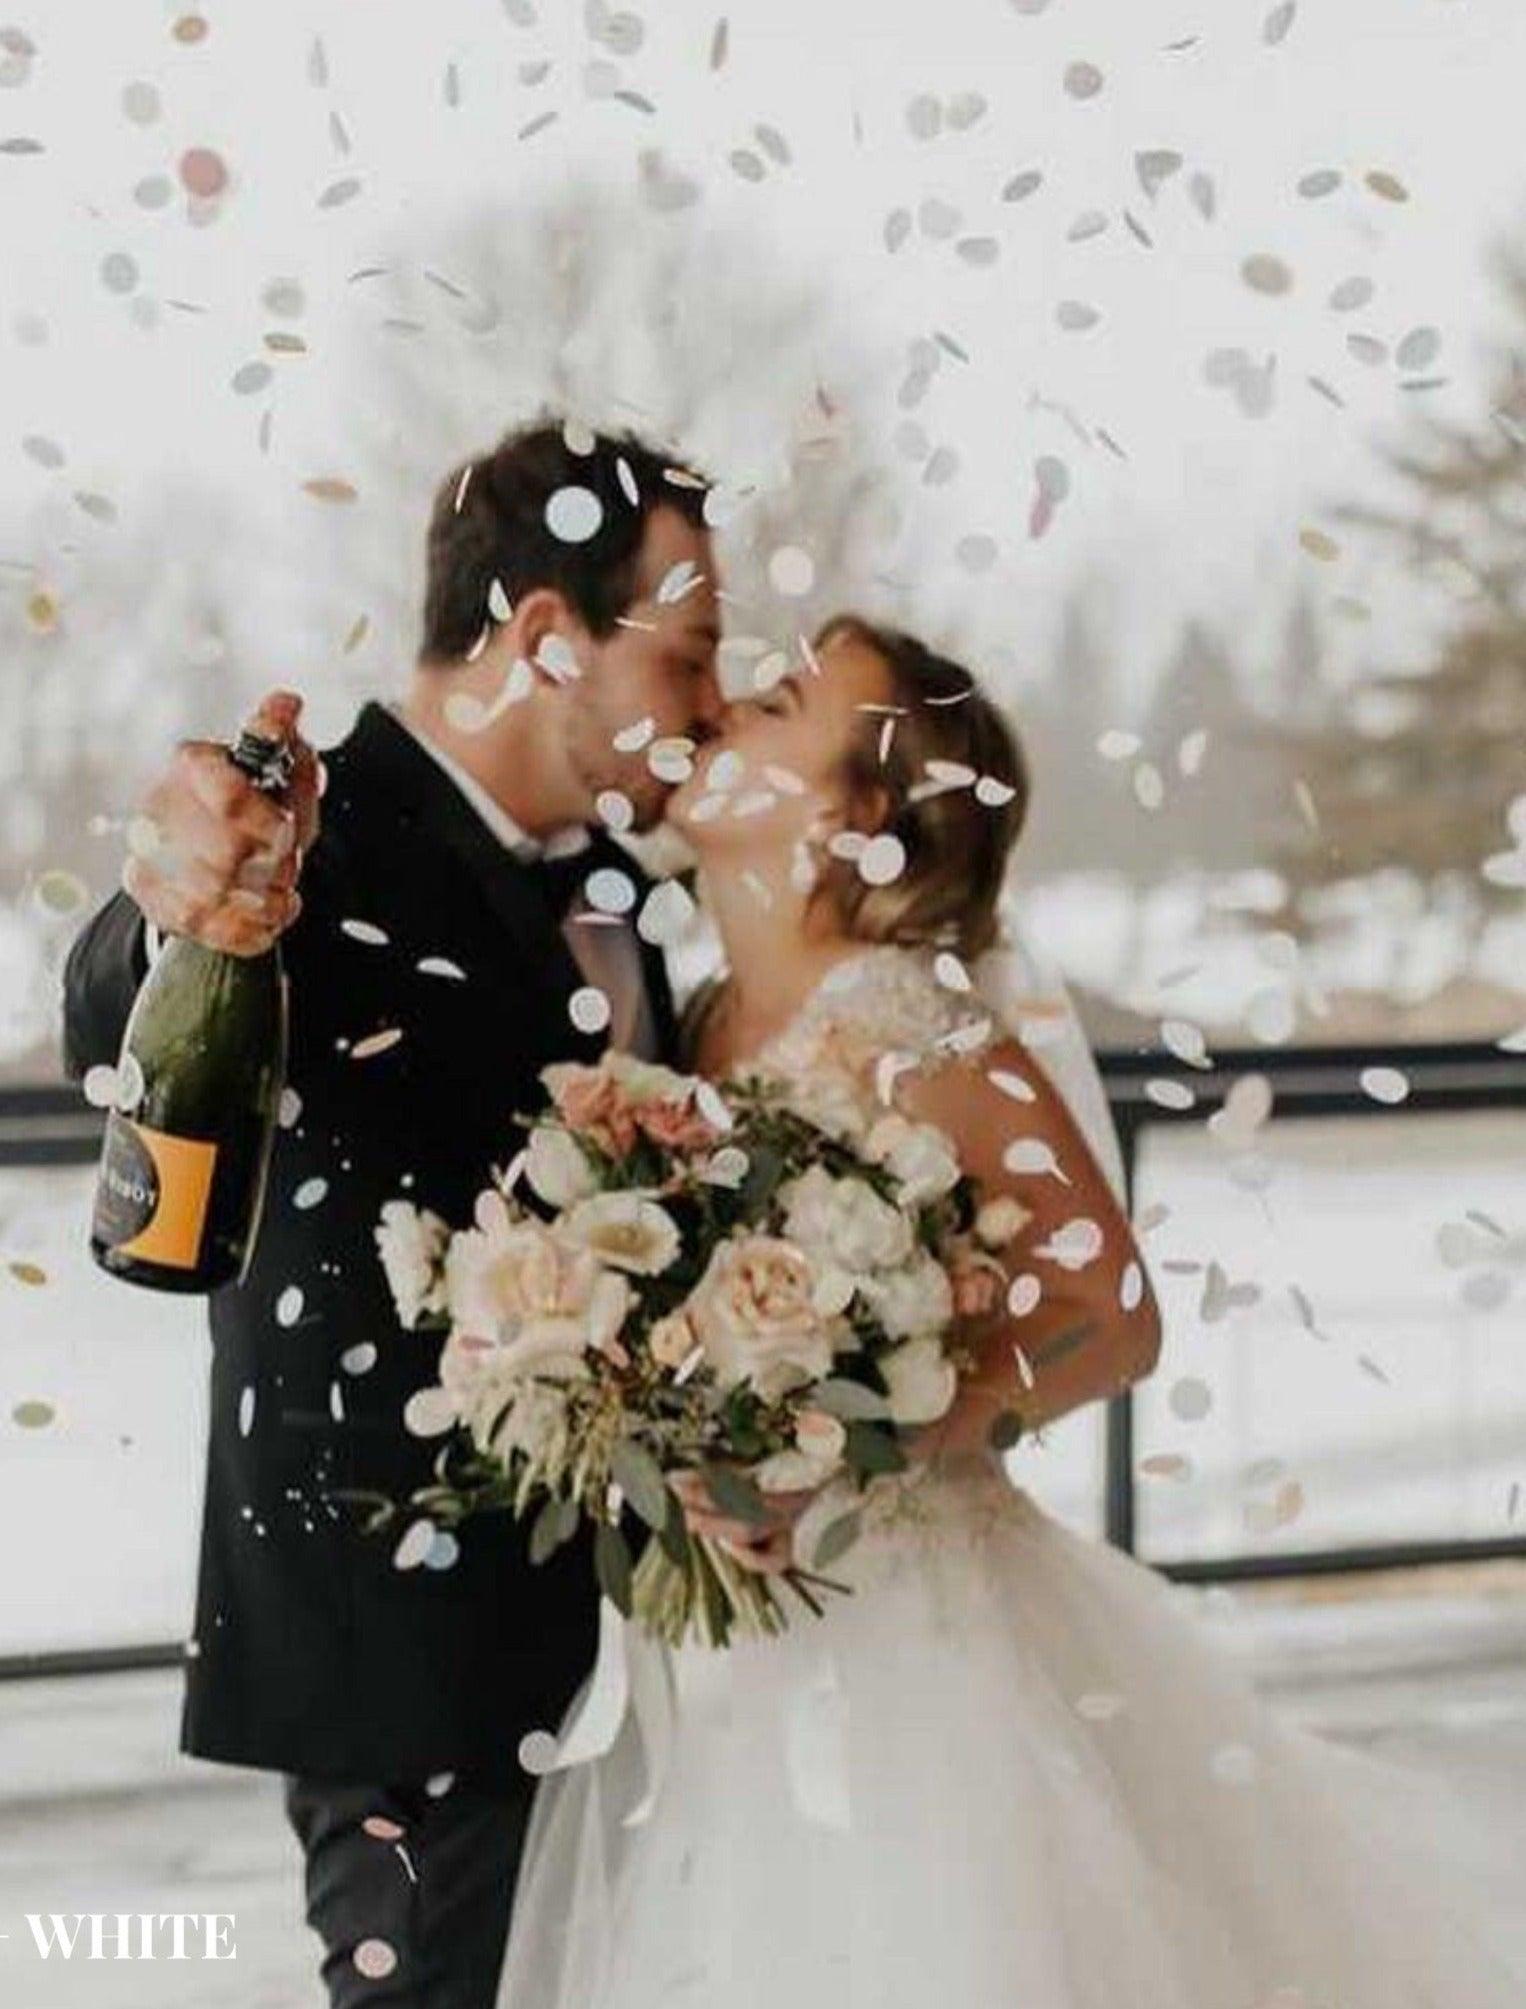 Biodegradable Confetti Water Soluble Wedding Exit Idea